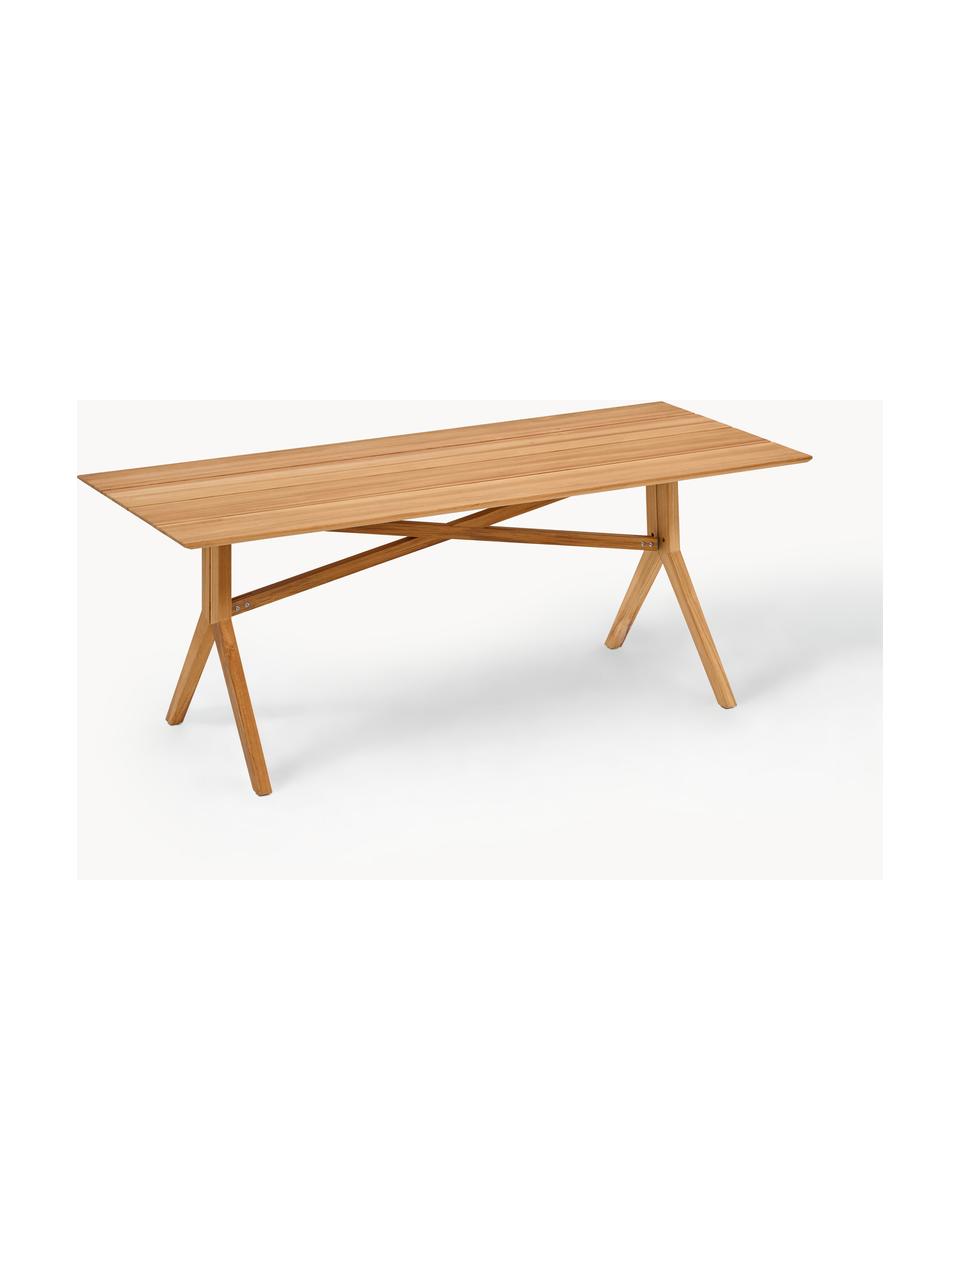 Table de jardin en bois de teck artisanale Loft, tailles variées, Bois de teck, Bois de teck, larg. 200 x prof. 90 cm